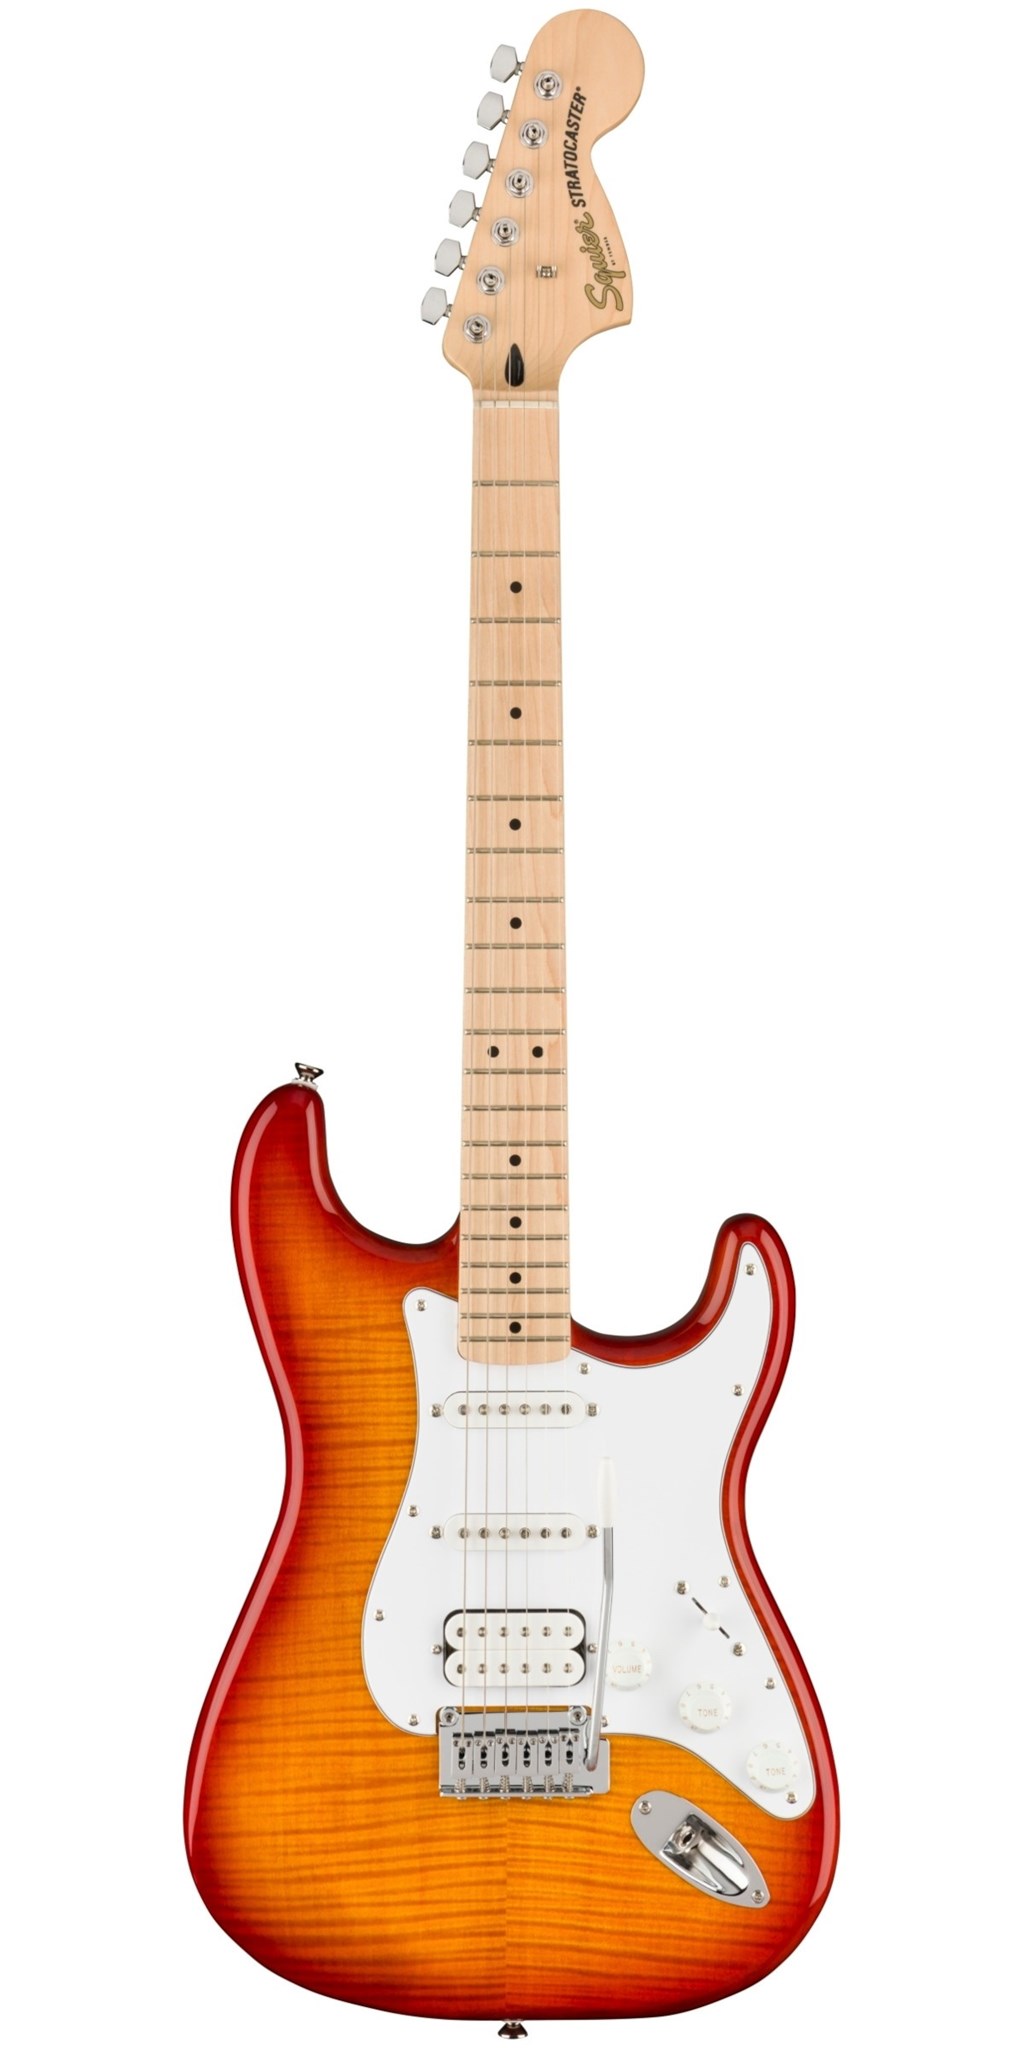 Imagem de Guitarra Eléctrica Fender SQ Affinity Strat FMT HSS MN WPG SSB 037-8152-547